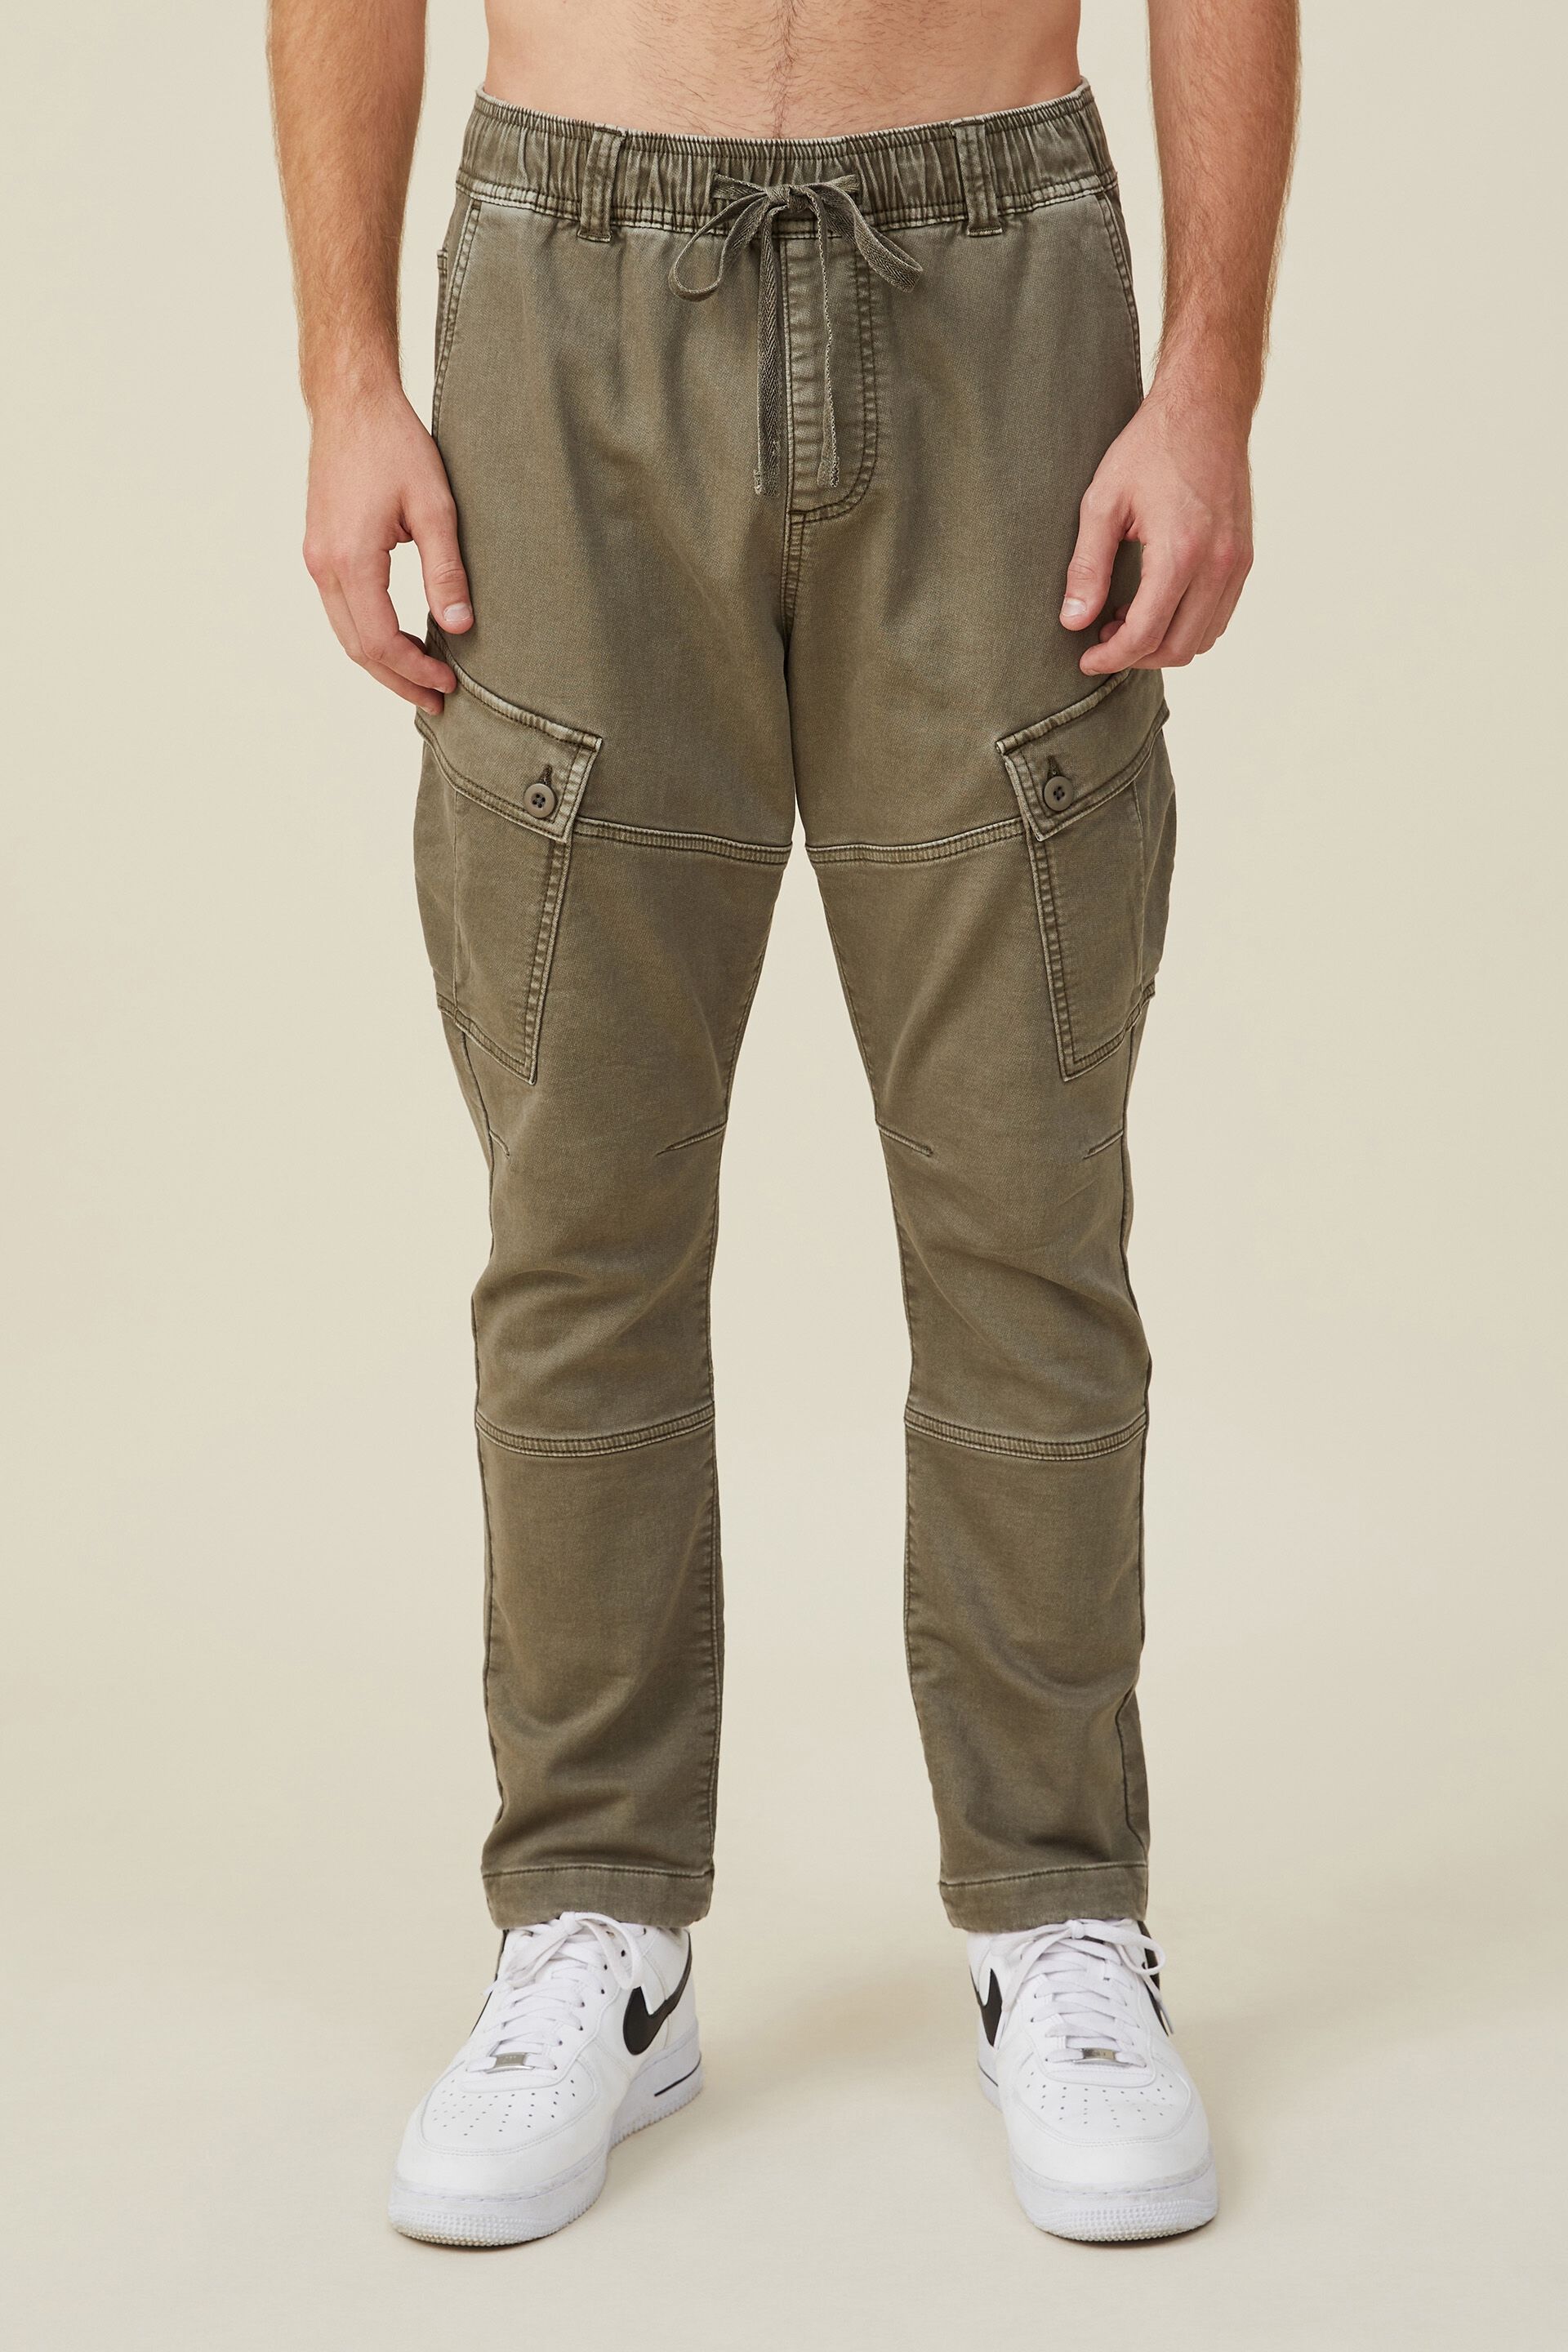 Shop BLACKTAILOR Unisex Street Style Plain Cotton Military Cargo Pants (C15  CARGO - 2color) by ClassyVision | BUYMA